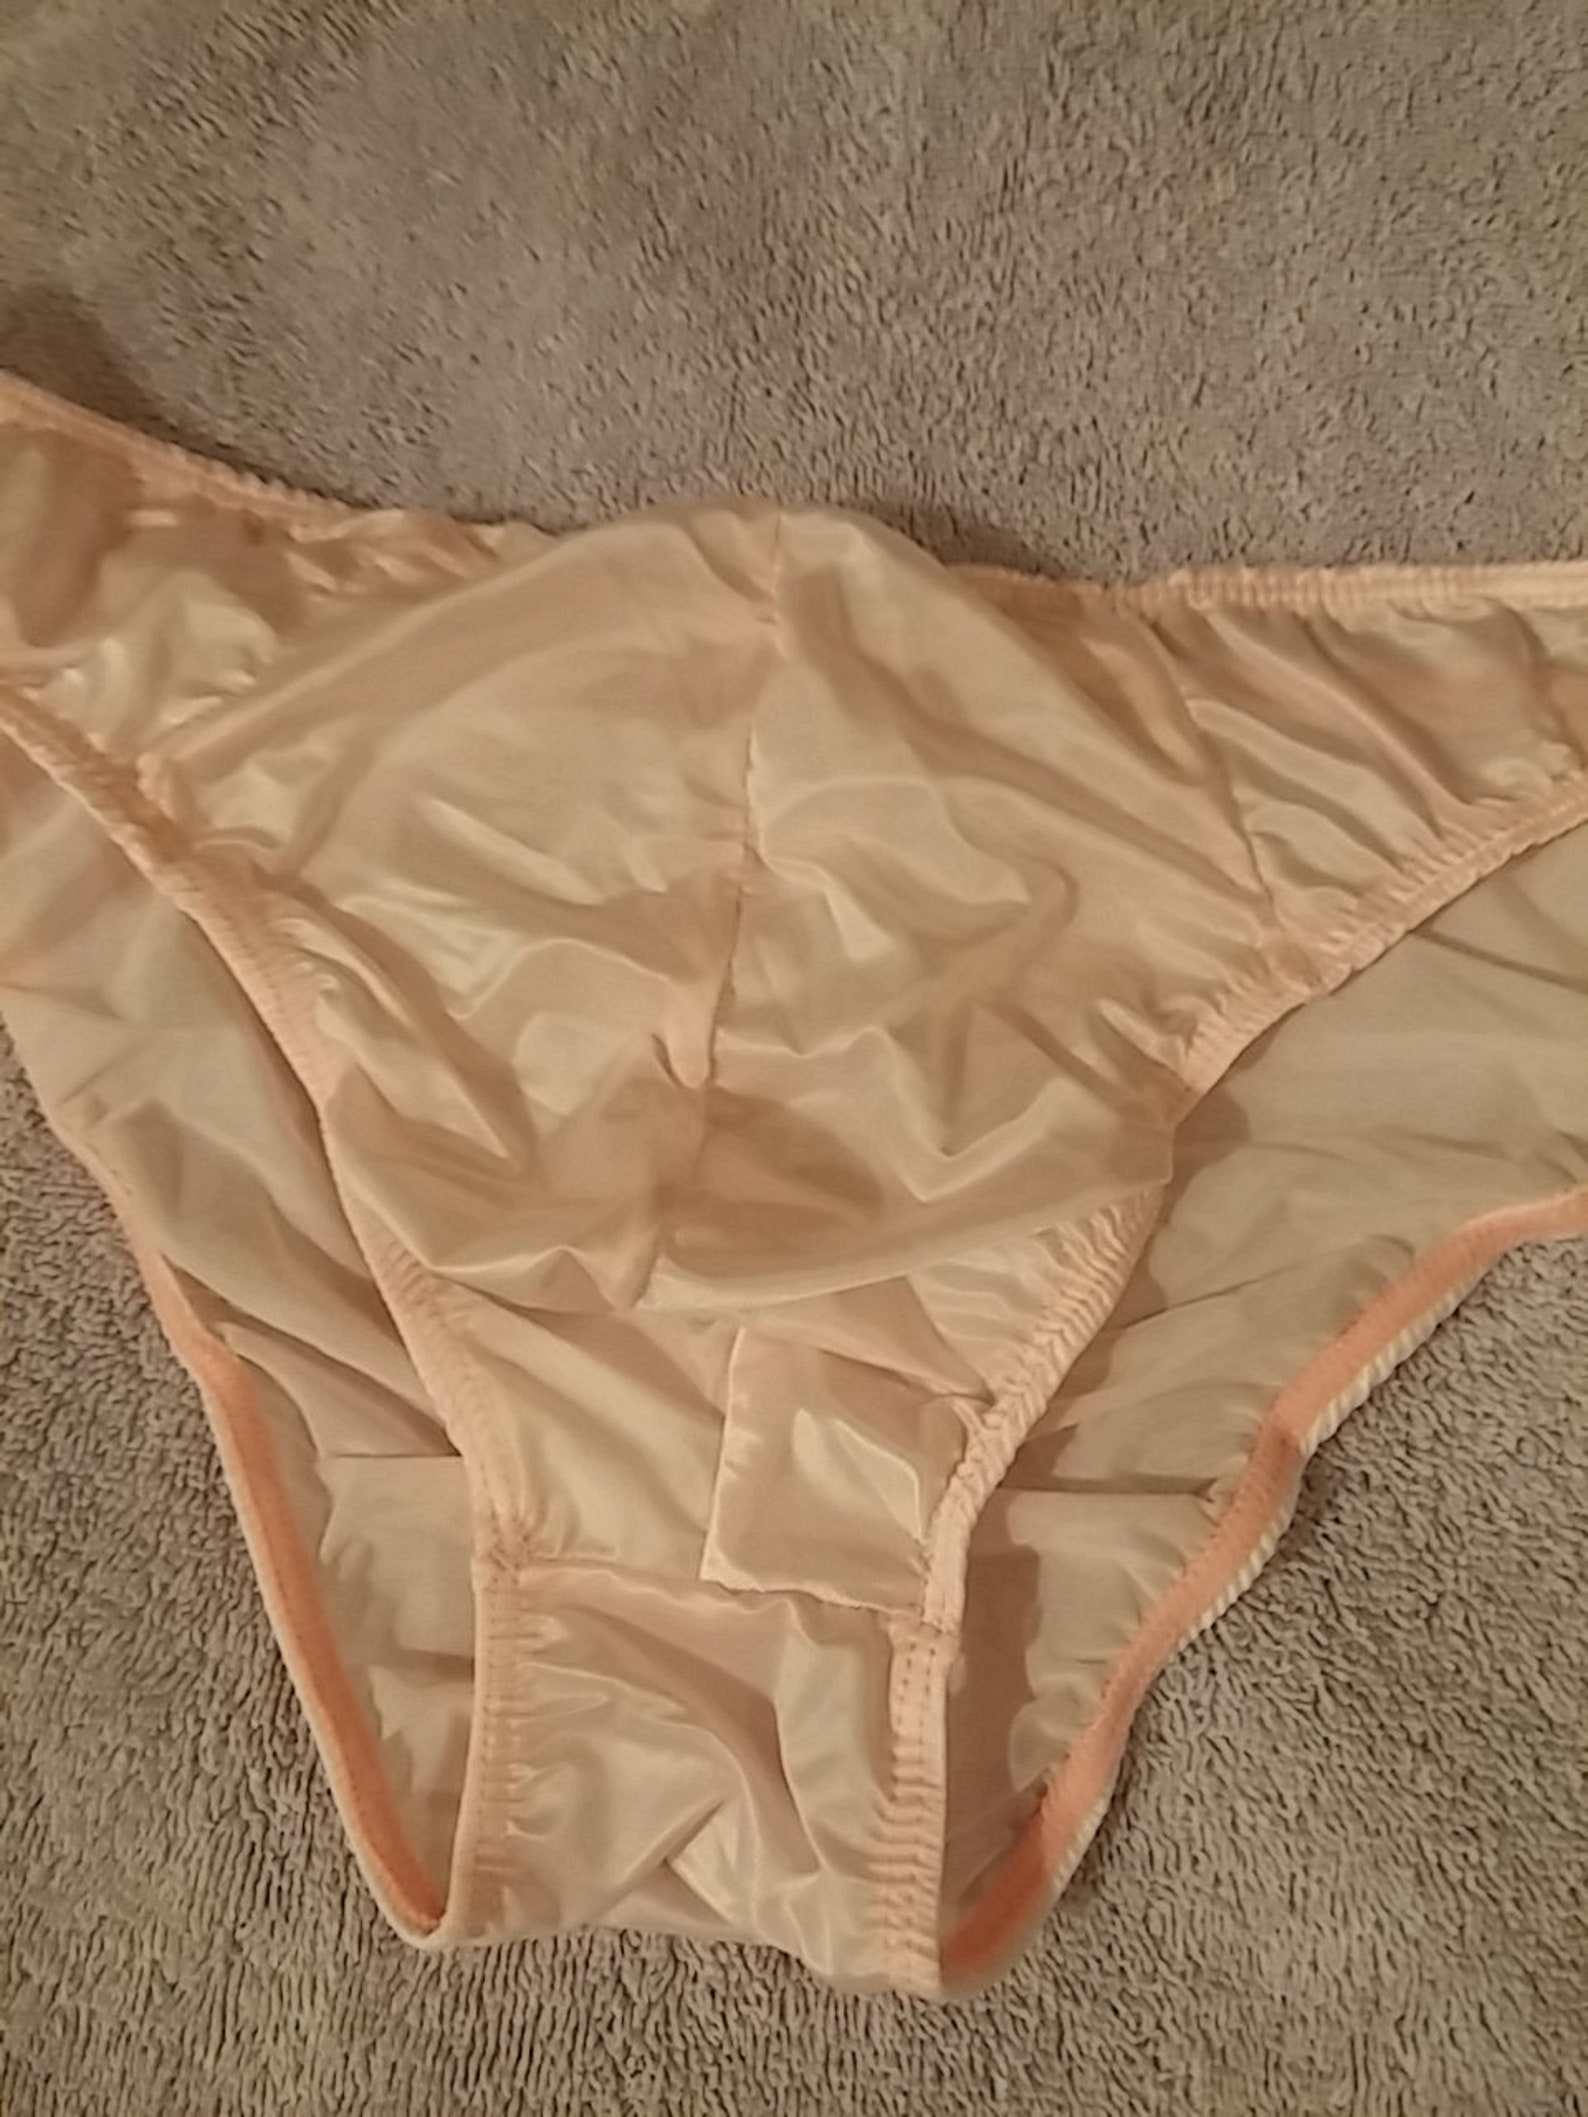 Sexy see through panties size meduim for women or men | Etsy